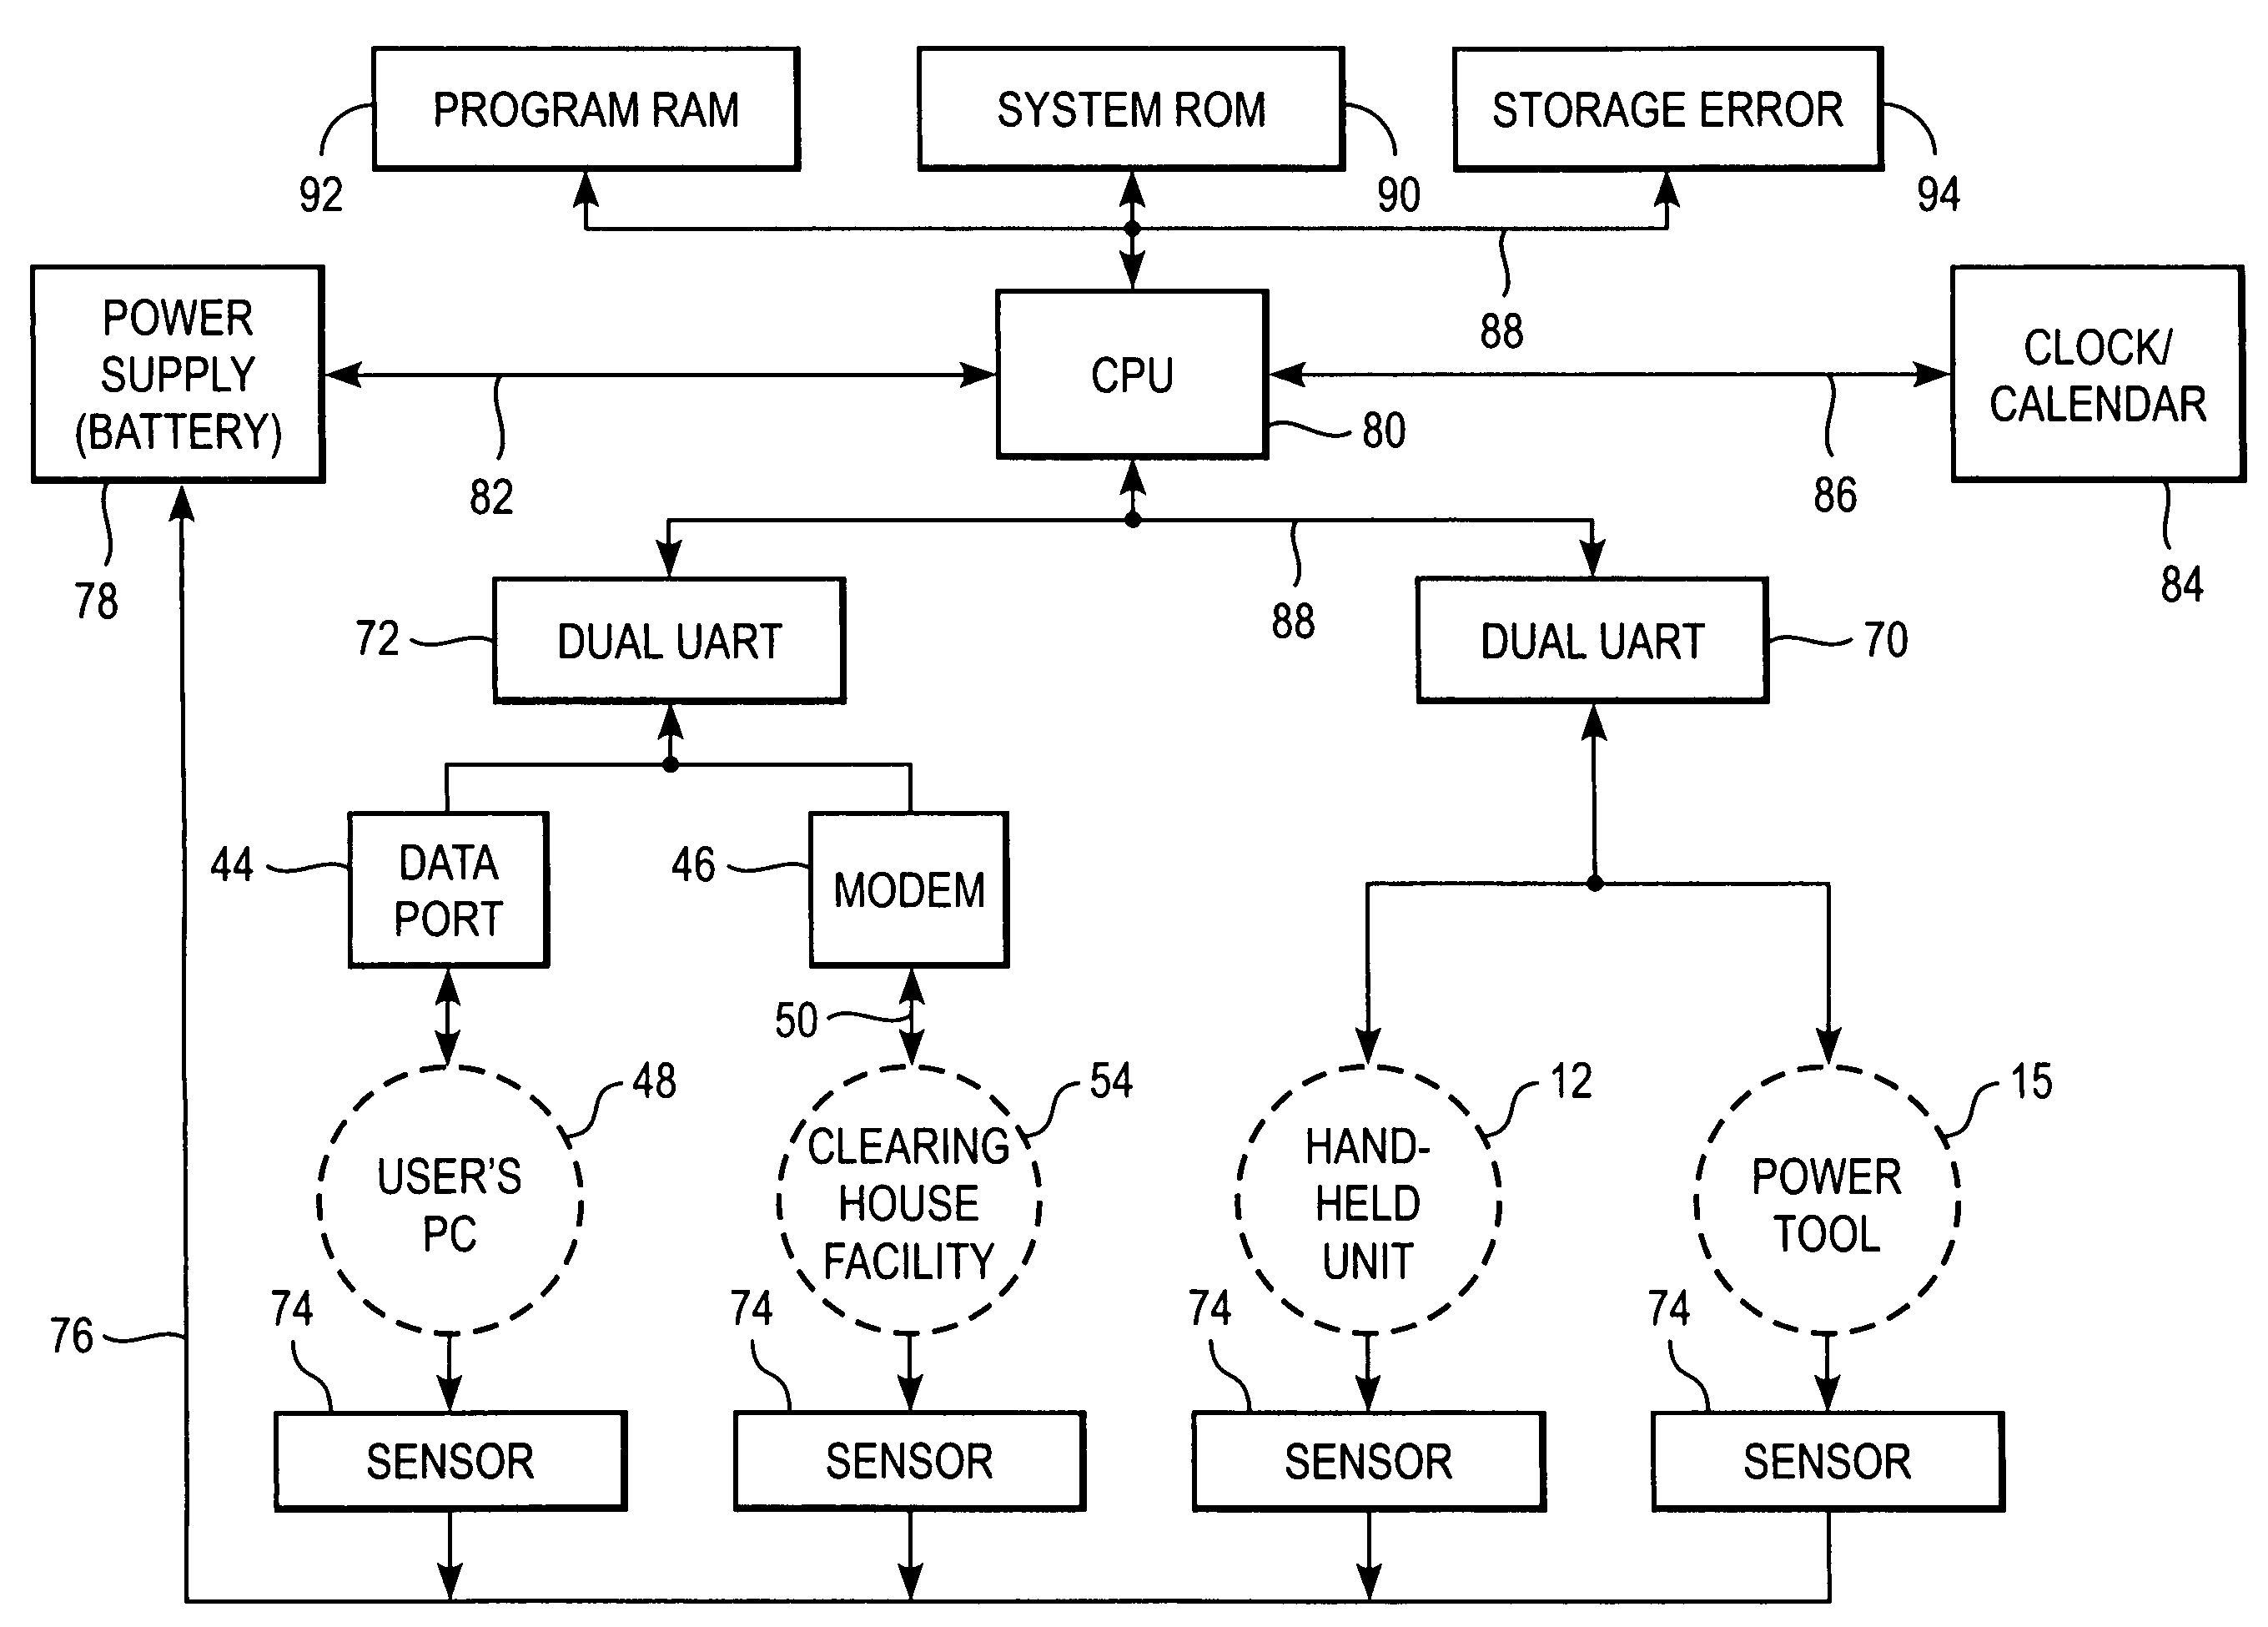 Modular microprocessor-based power tool system